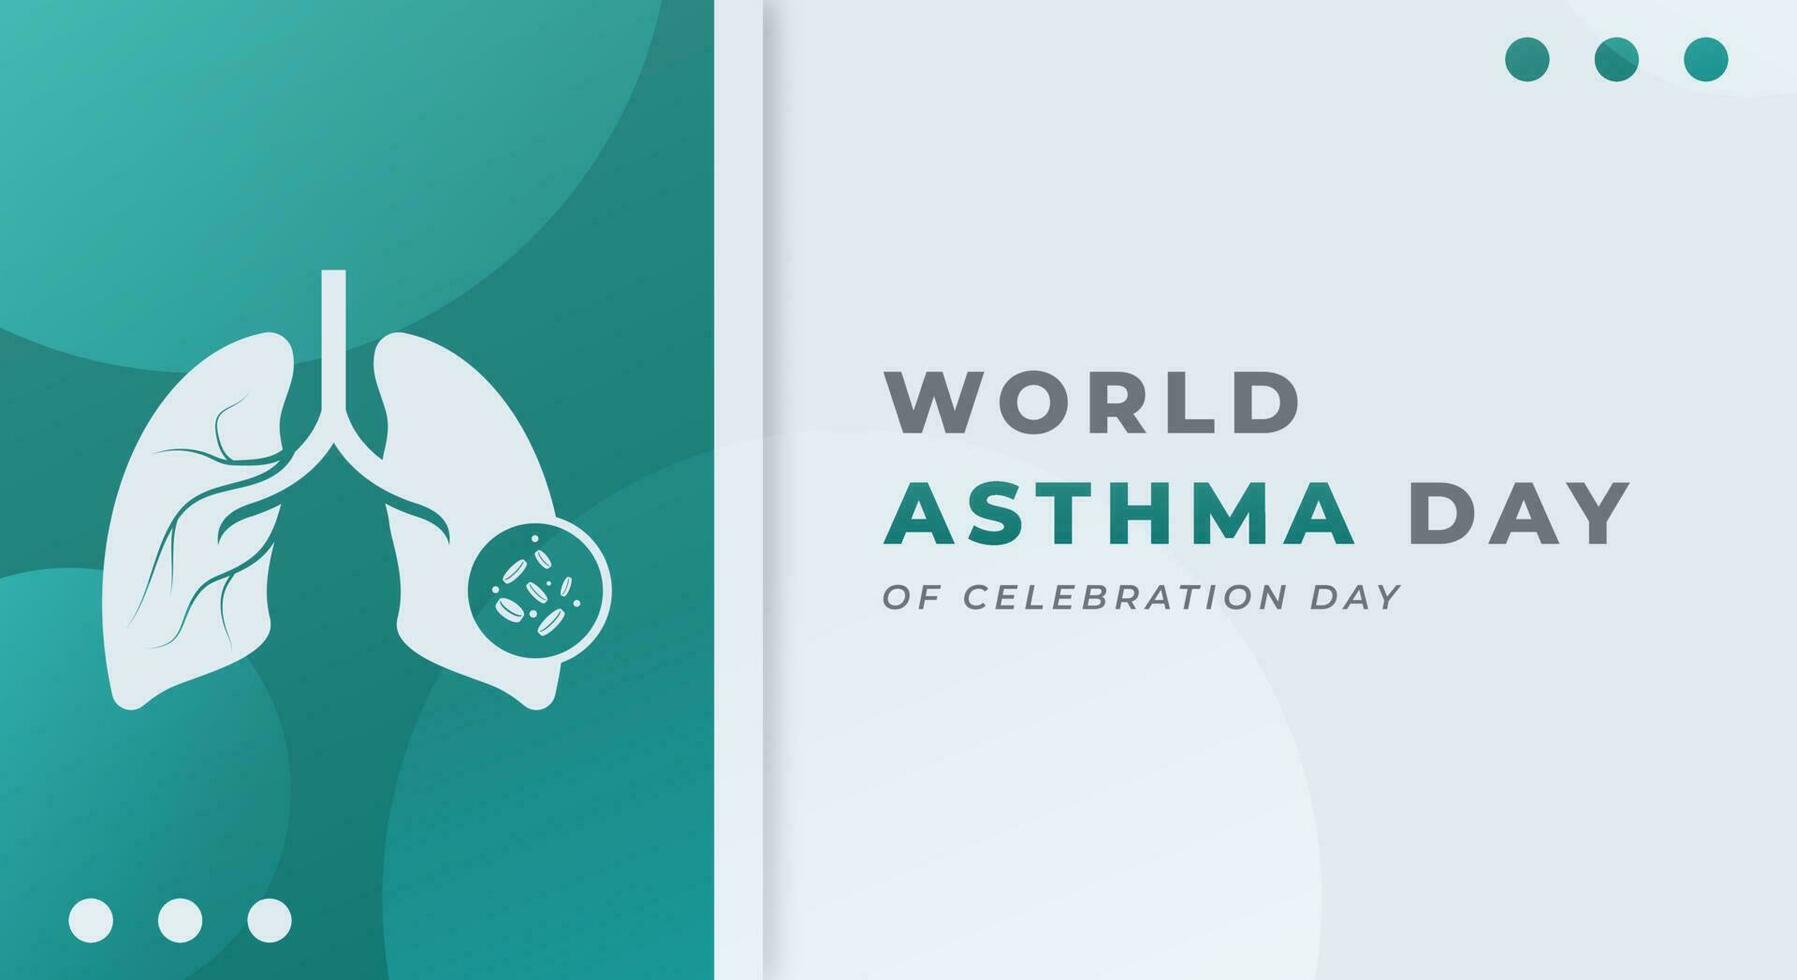 World Asthma Day Celebration Vector Design Illustration for Background, Poster, Banner, Advertising, Greeting Card